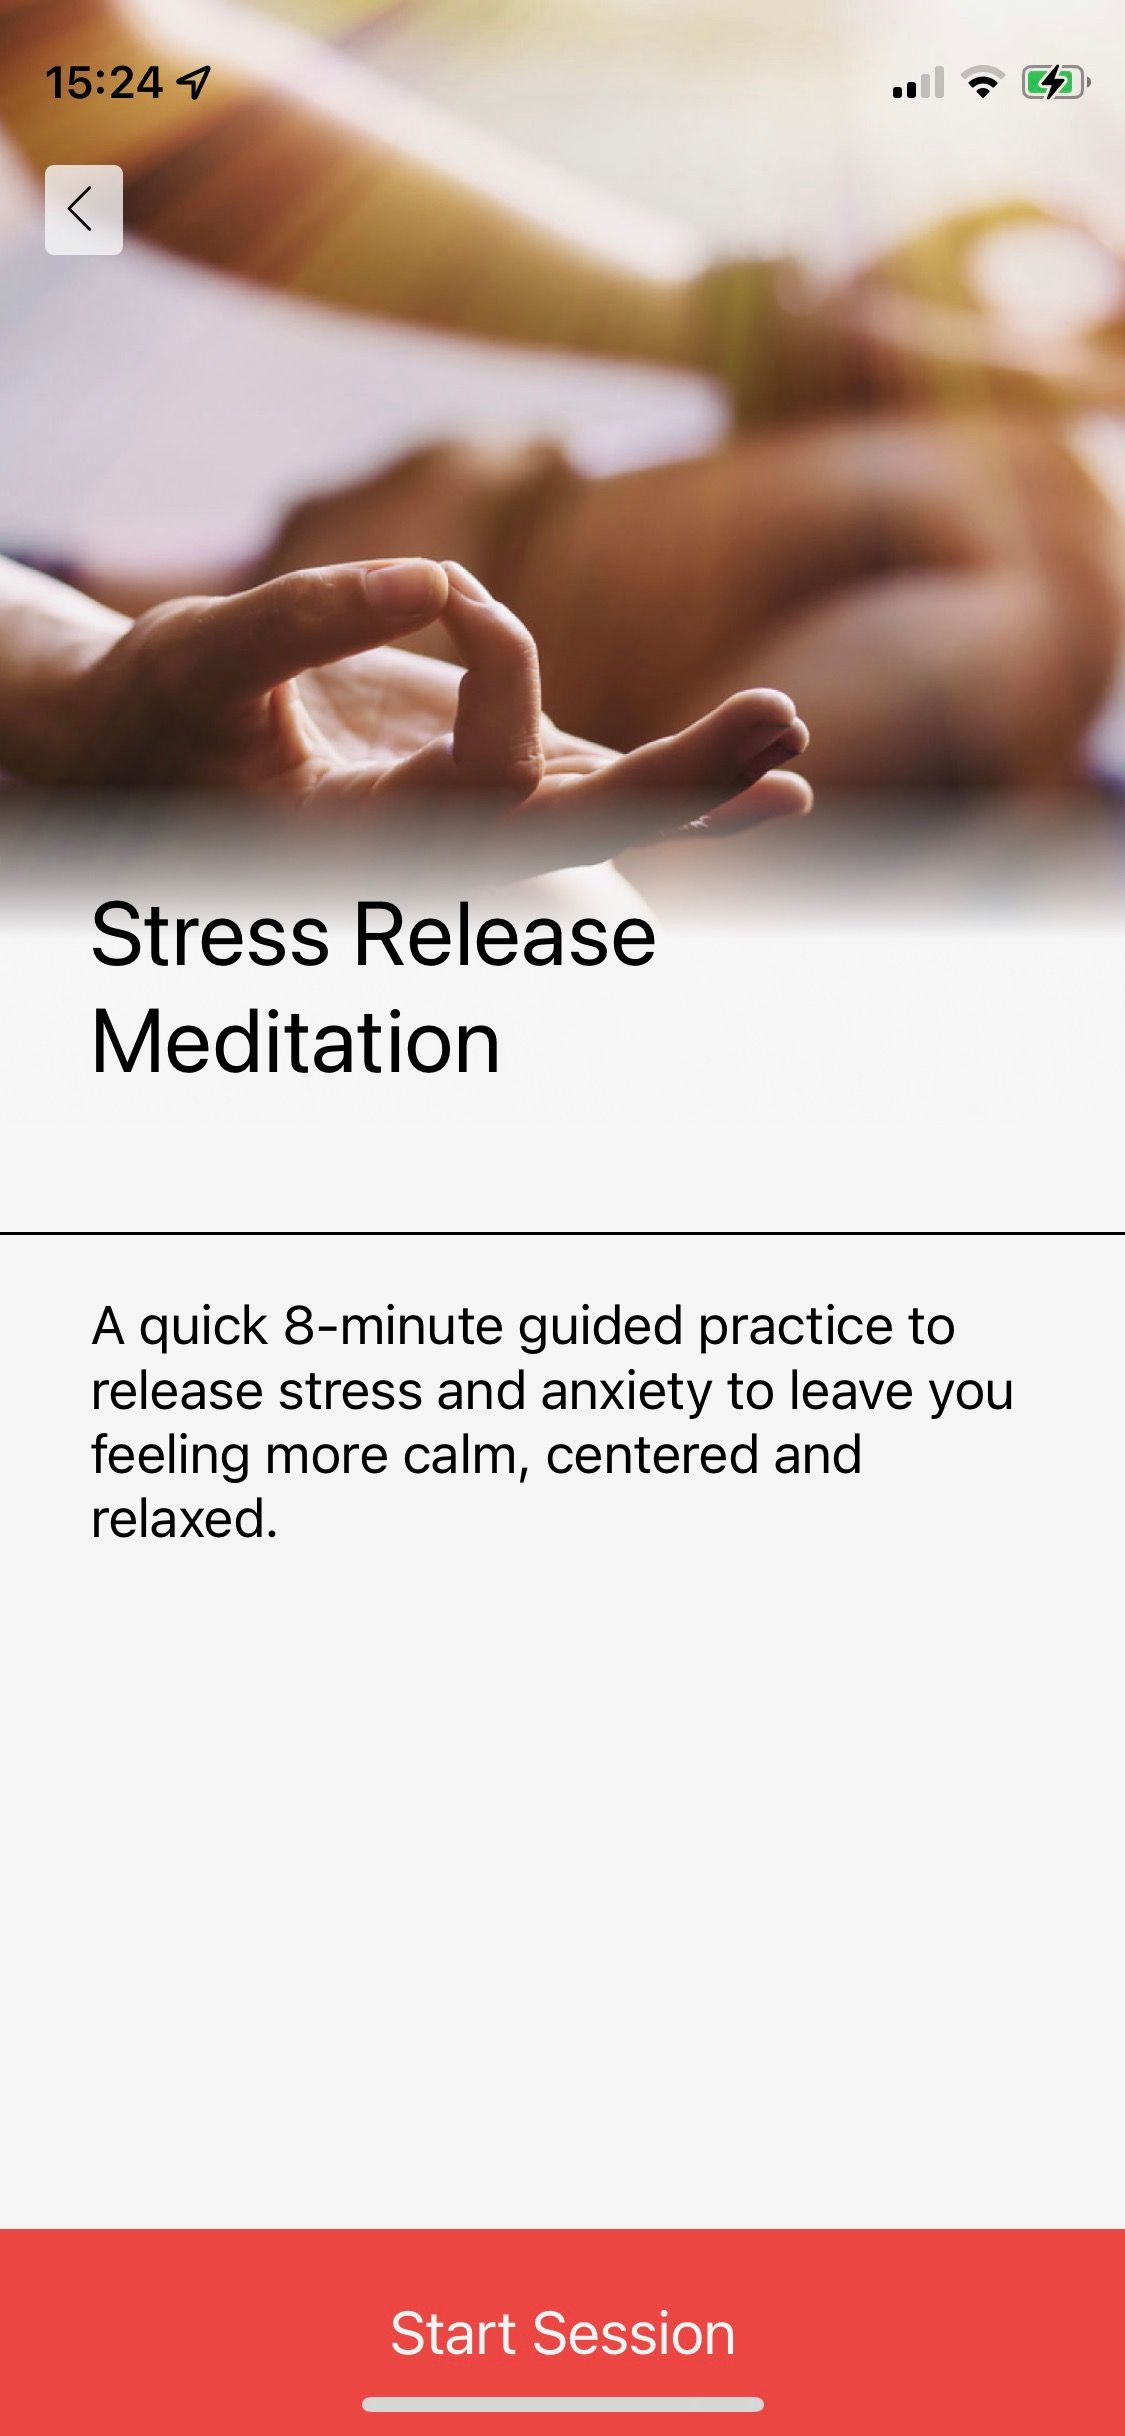 Screenshot from Jillian Michaels app showing stress release meditation